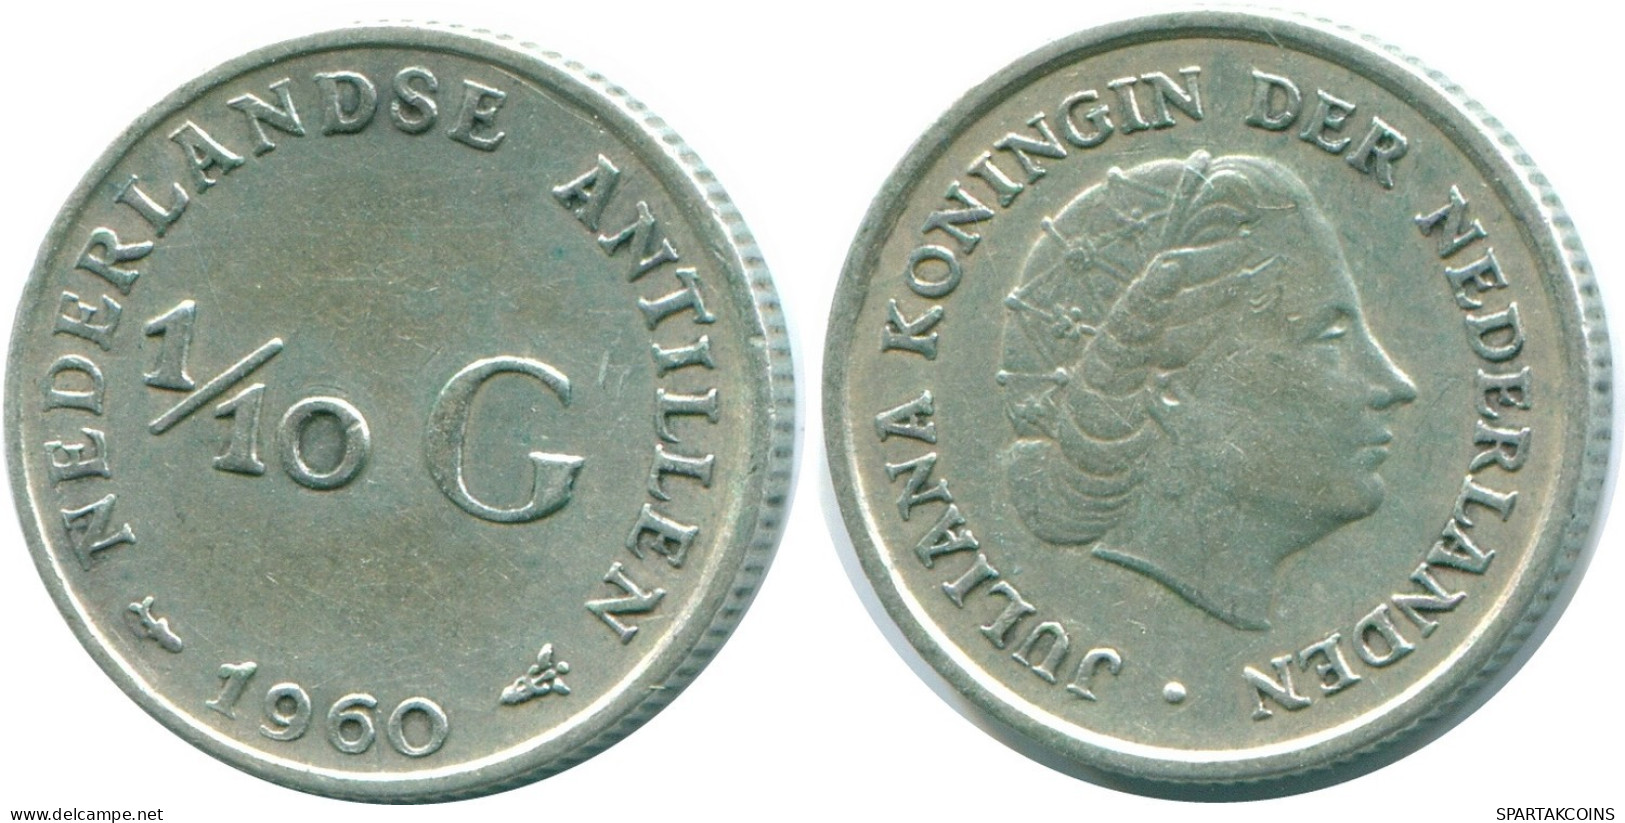 1/10 GULDEN 1960 NETHERLANDS ANTILLES SILVER Colonial Coin #NL12251.3.U.A - Antilles Néerlandaises